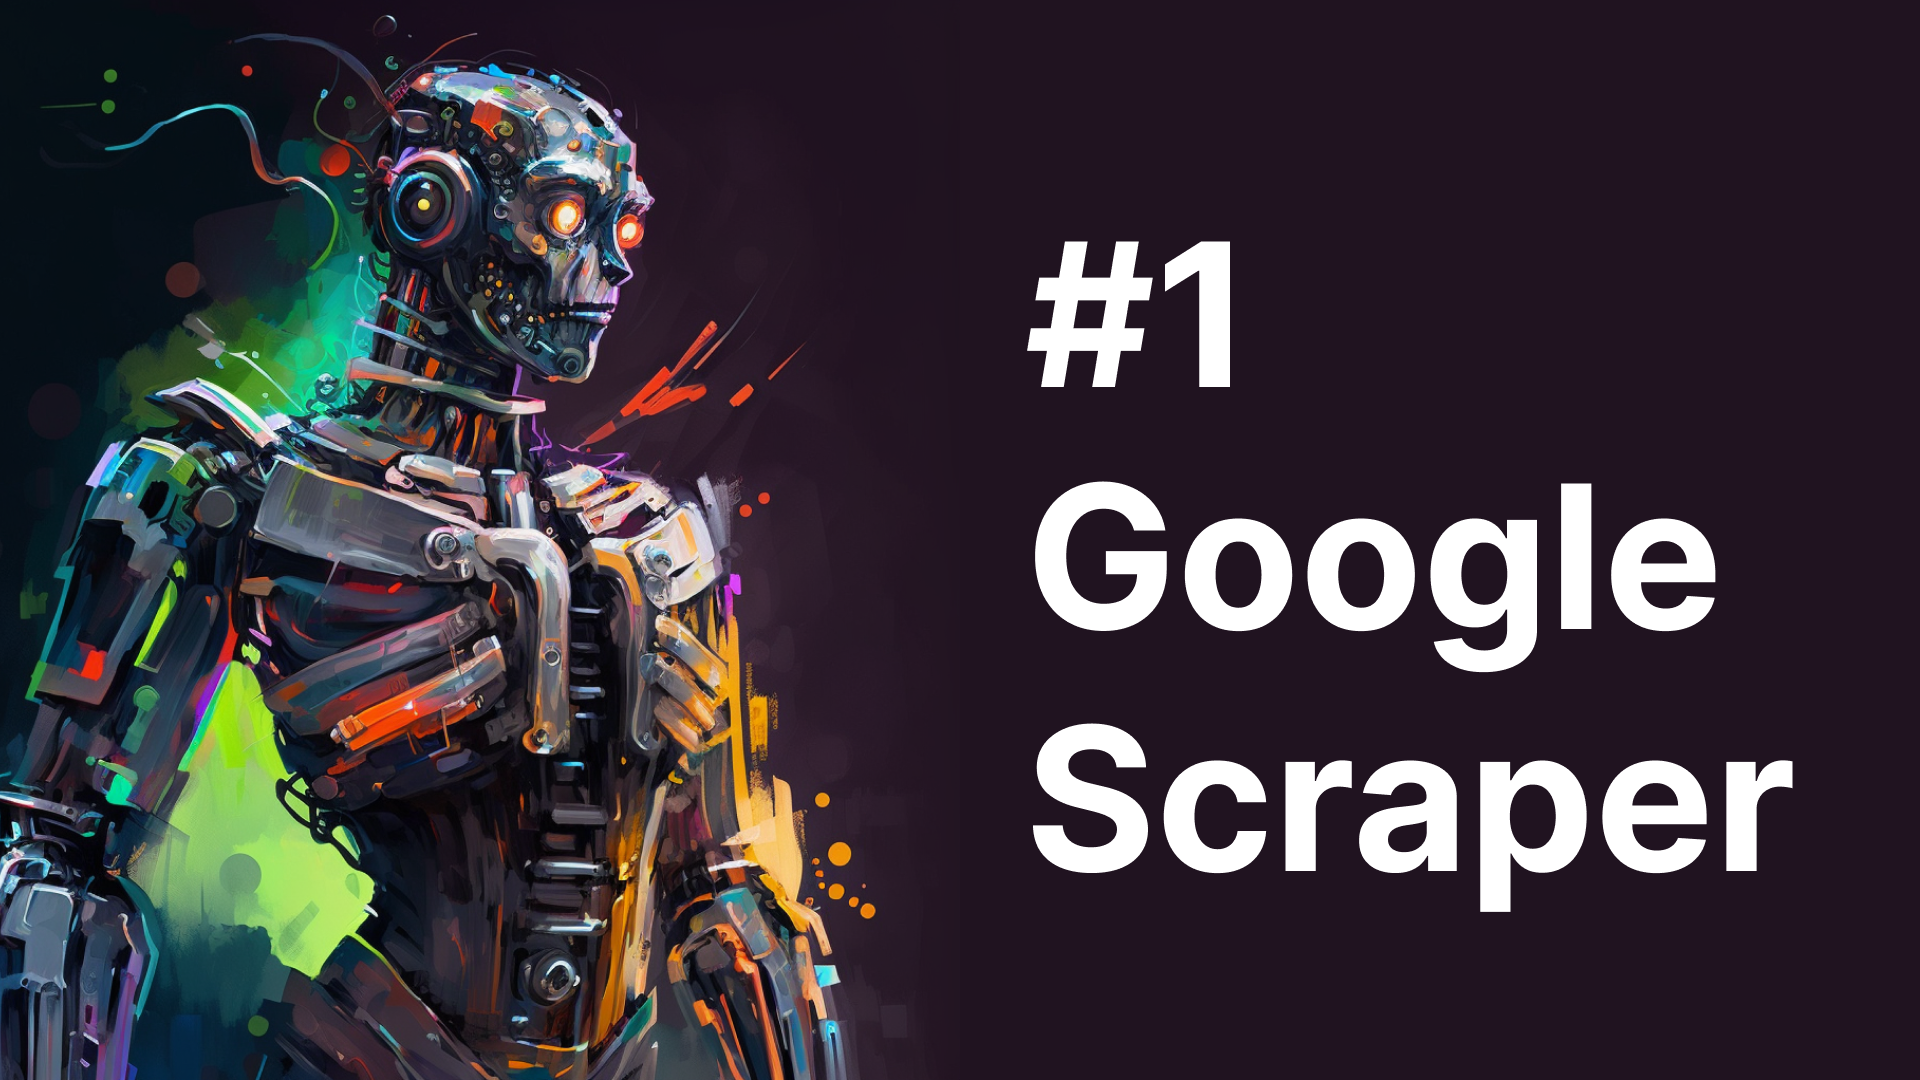 Google Scraper Featured Image